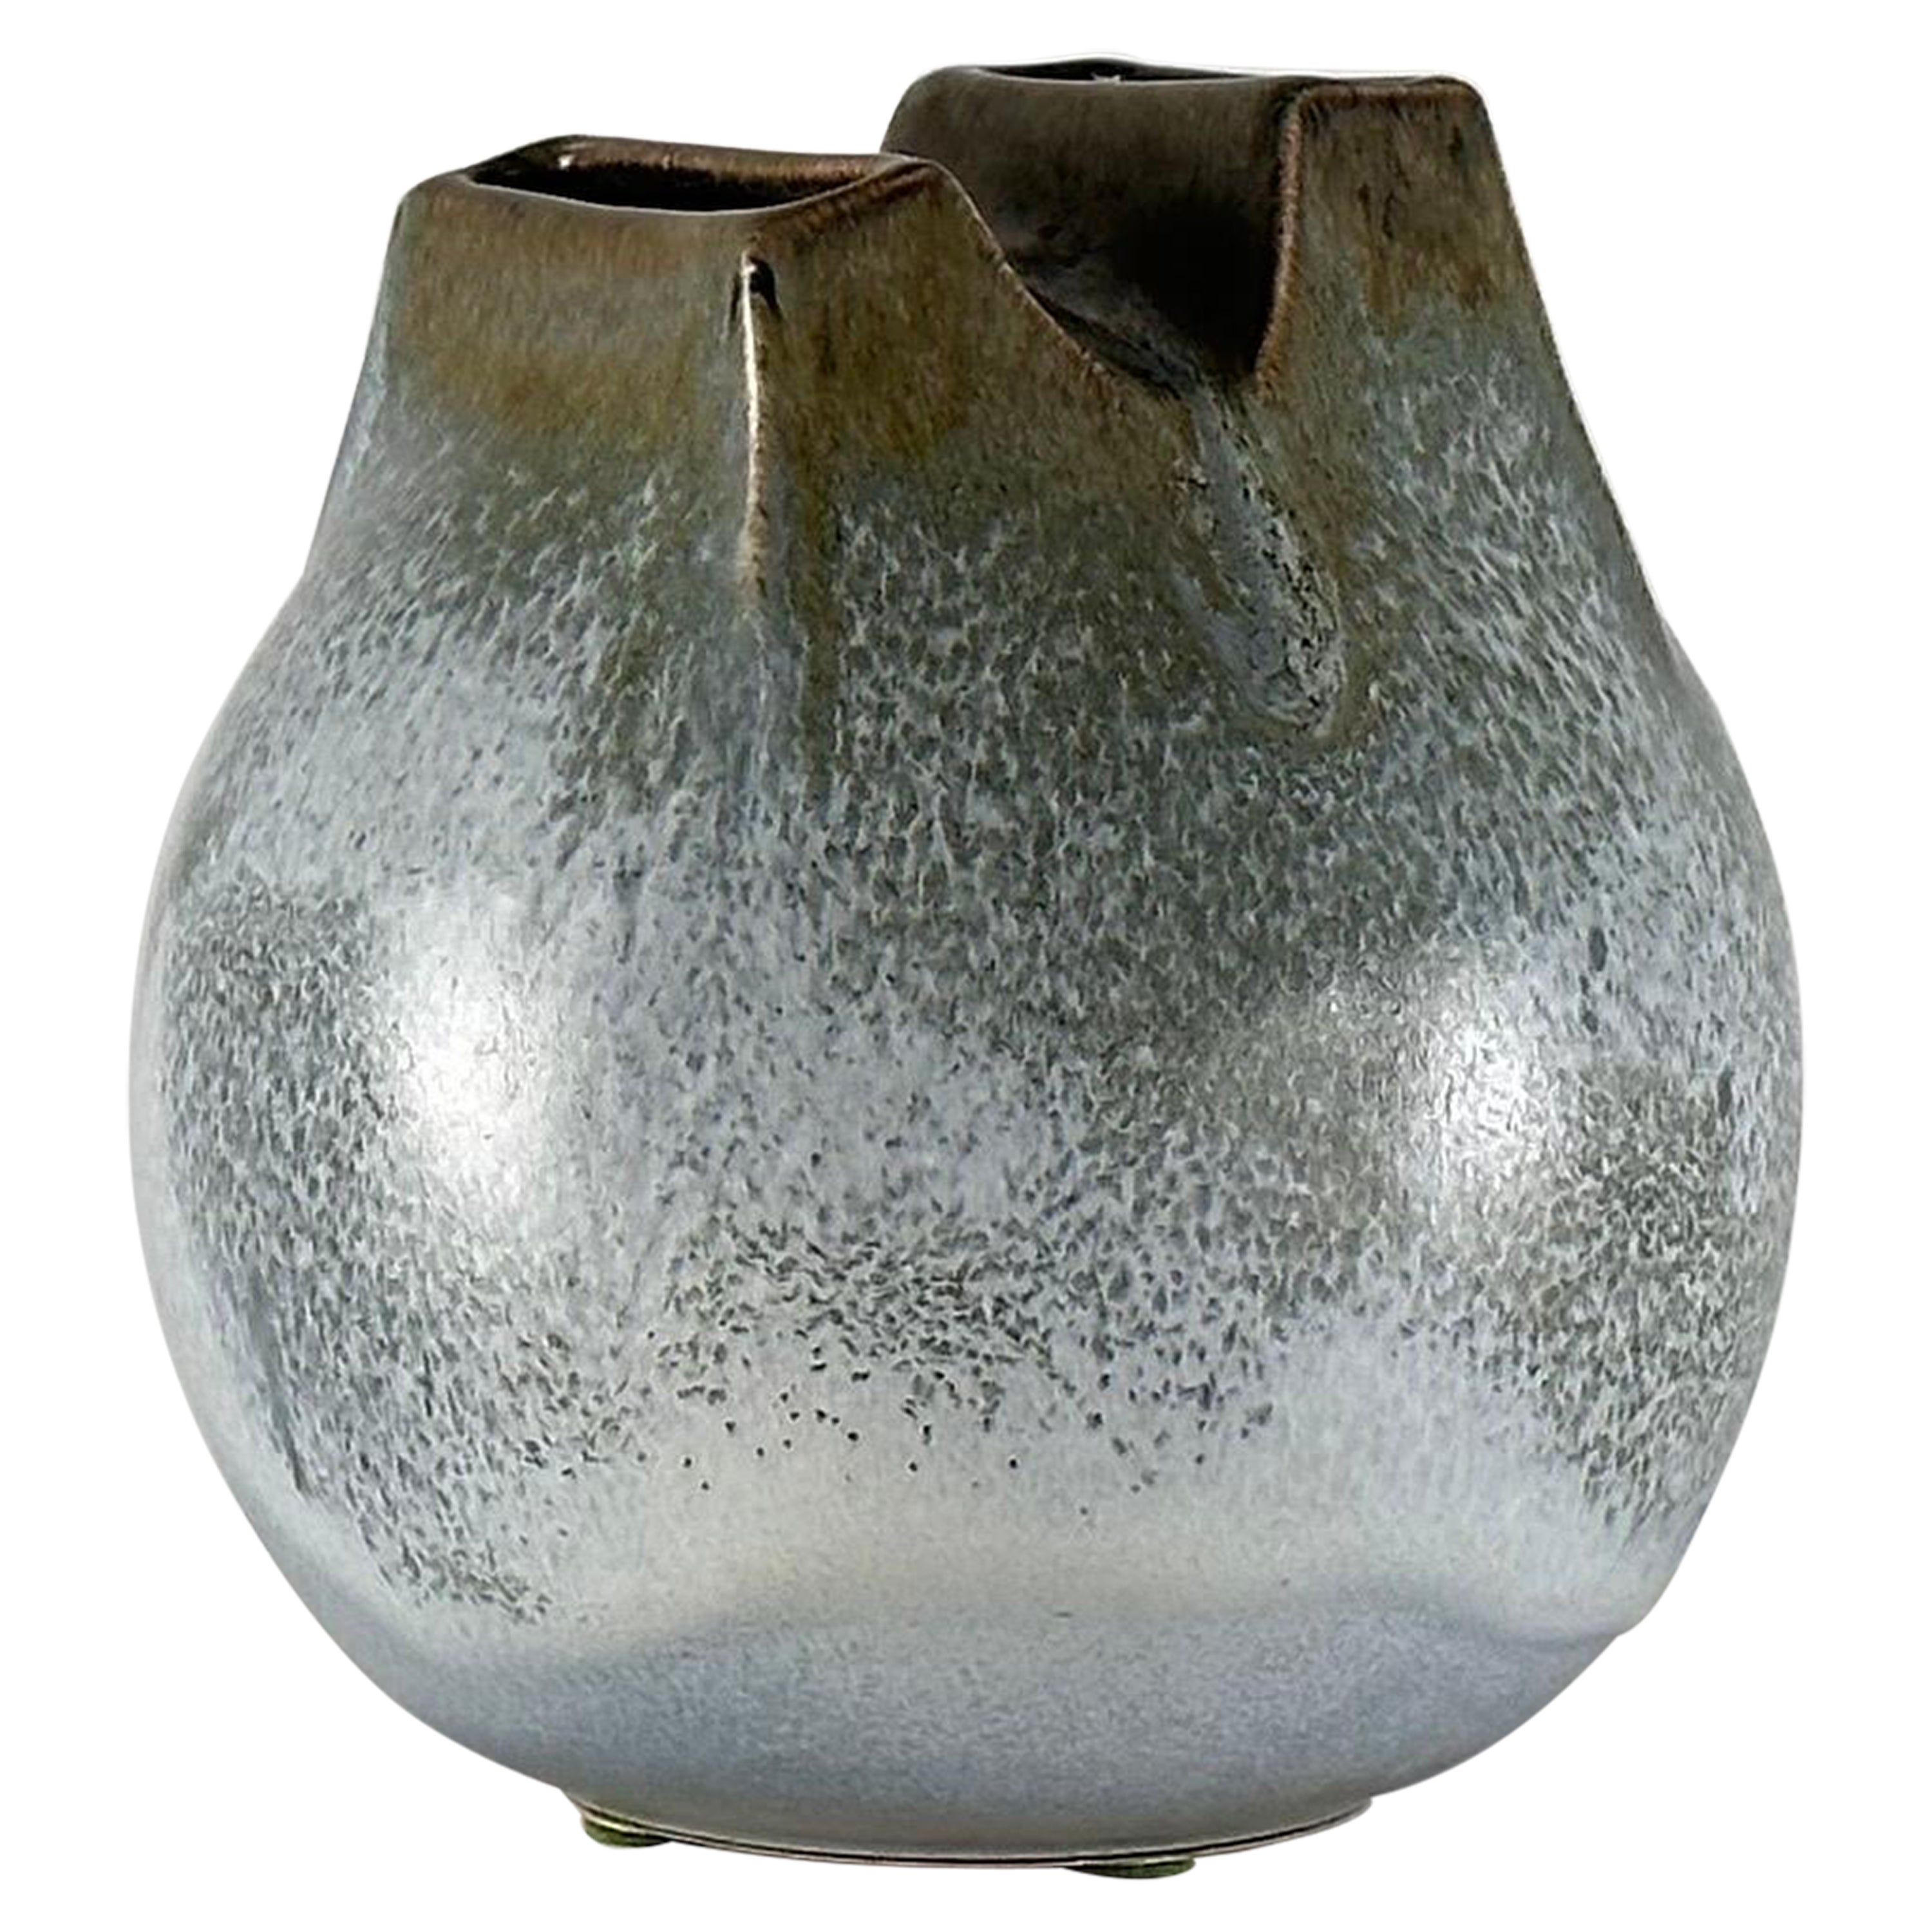 Unique 1970s Franco Bucci Ceramic Vase: 'Whistle' with Two Mouths